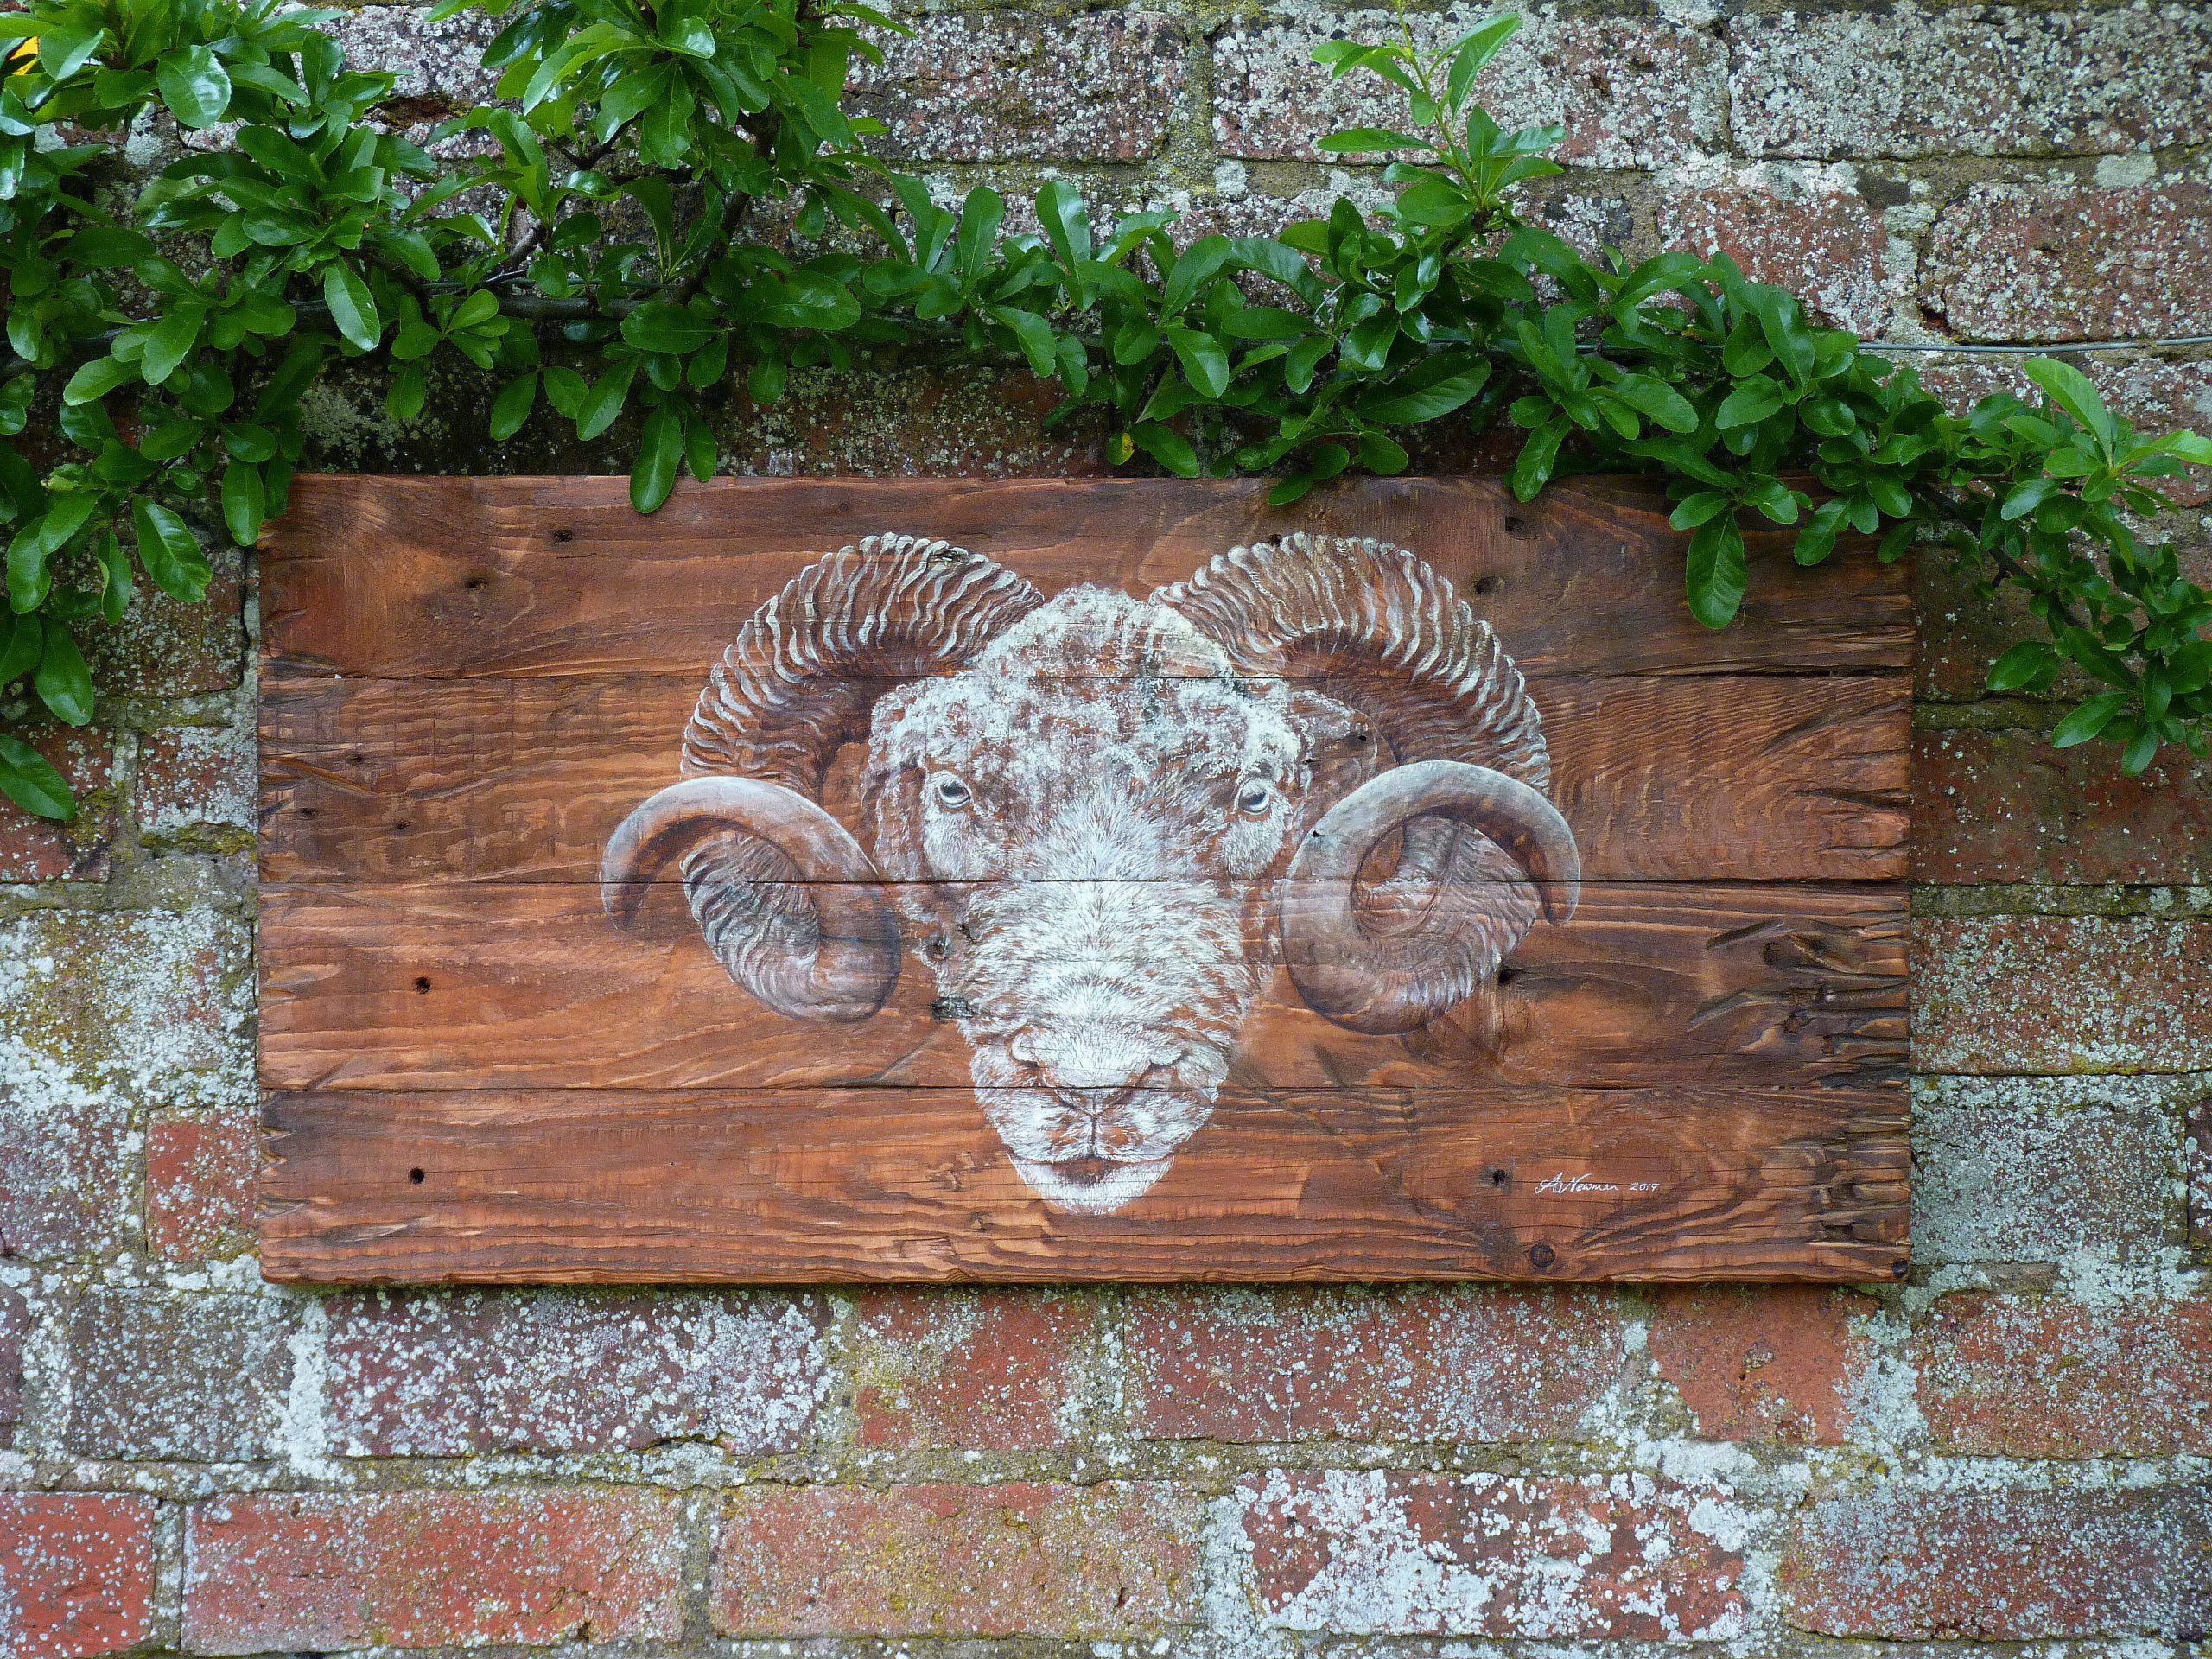 Dorset Sheep portrait